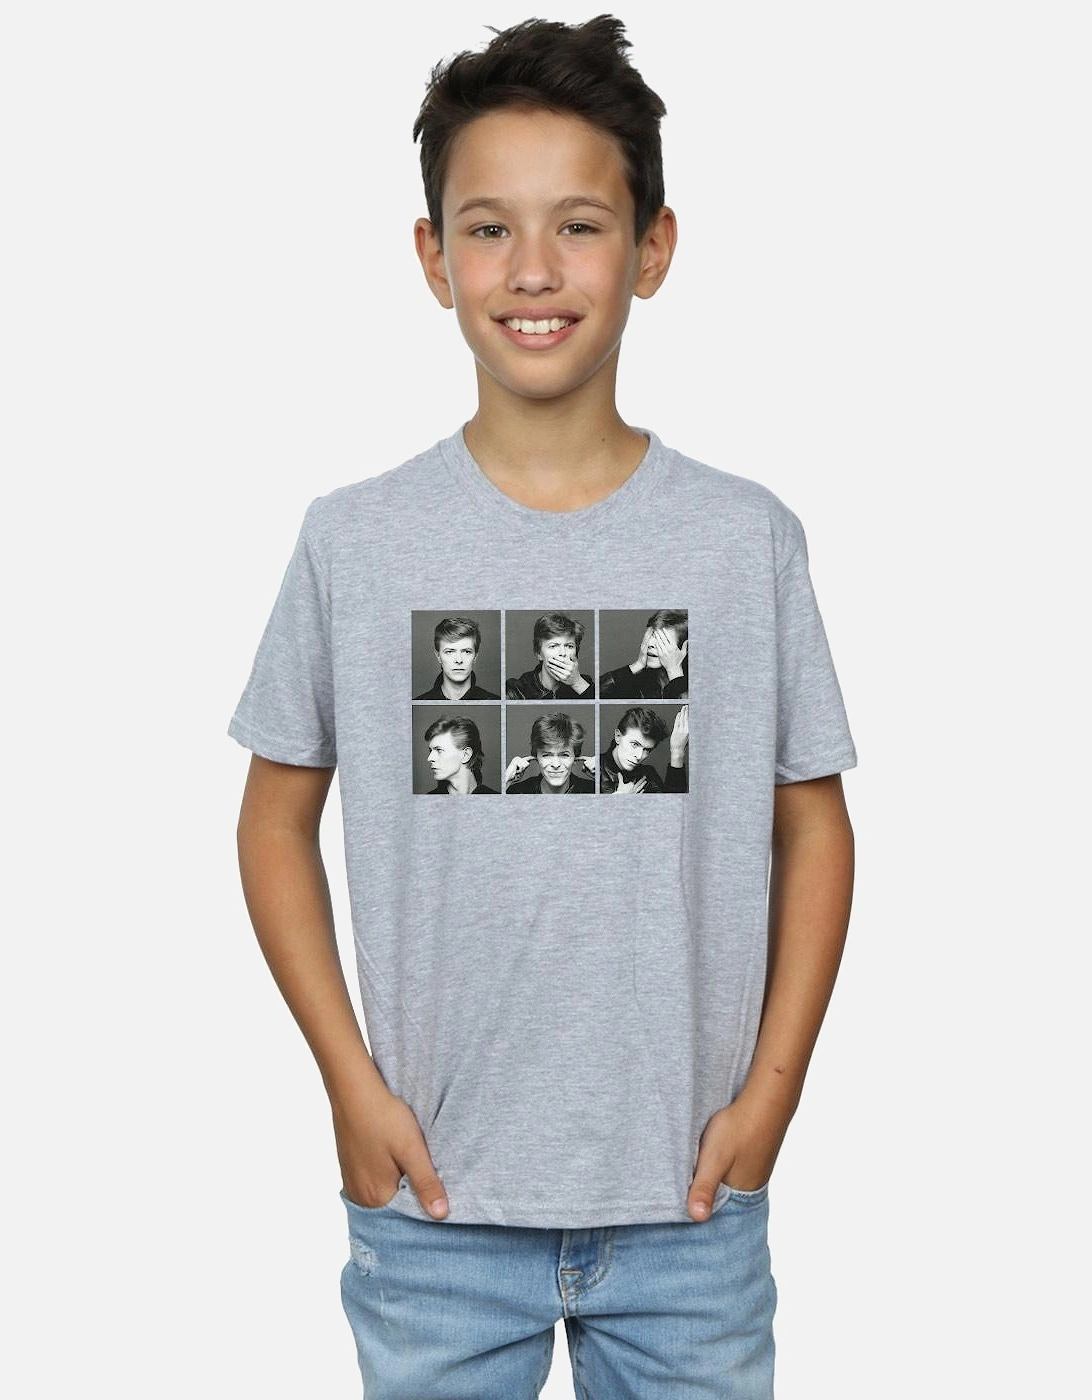 Boys Photo Collage T-Shirt